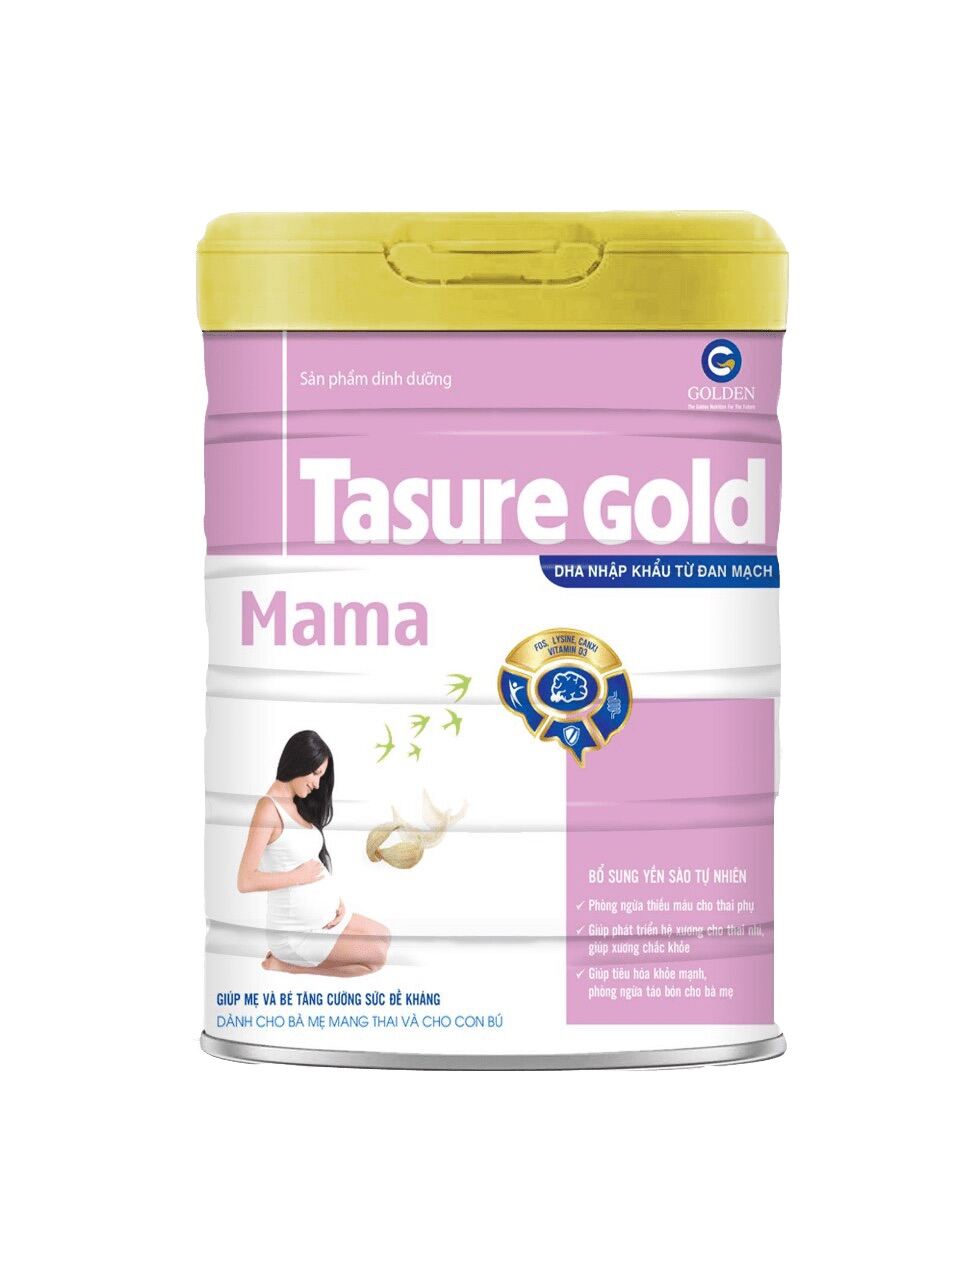 Tasure gold mama